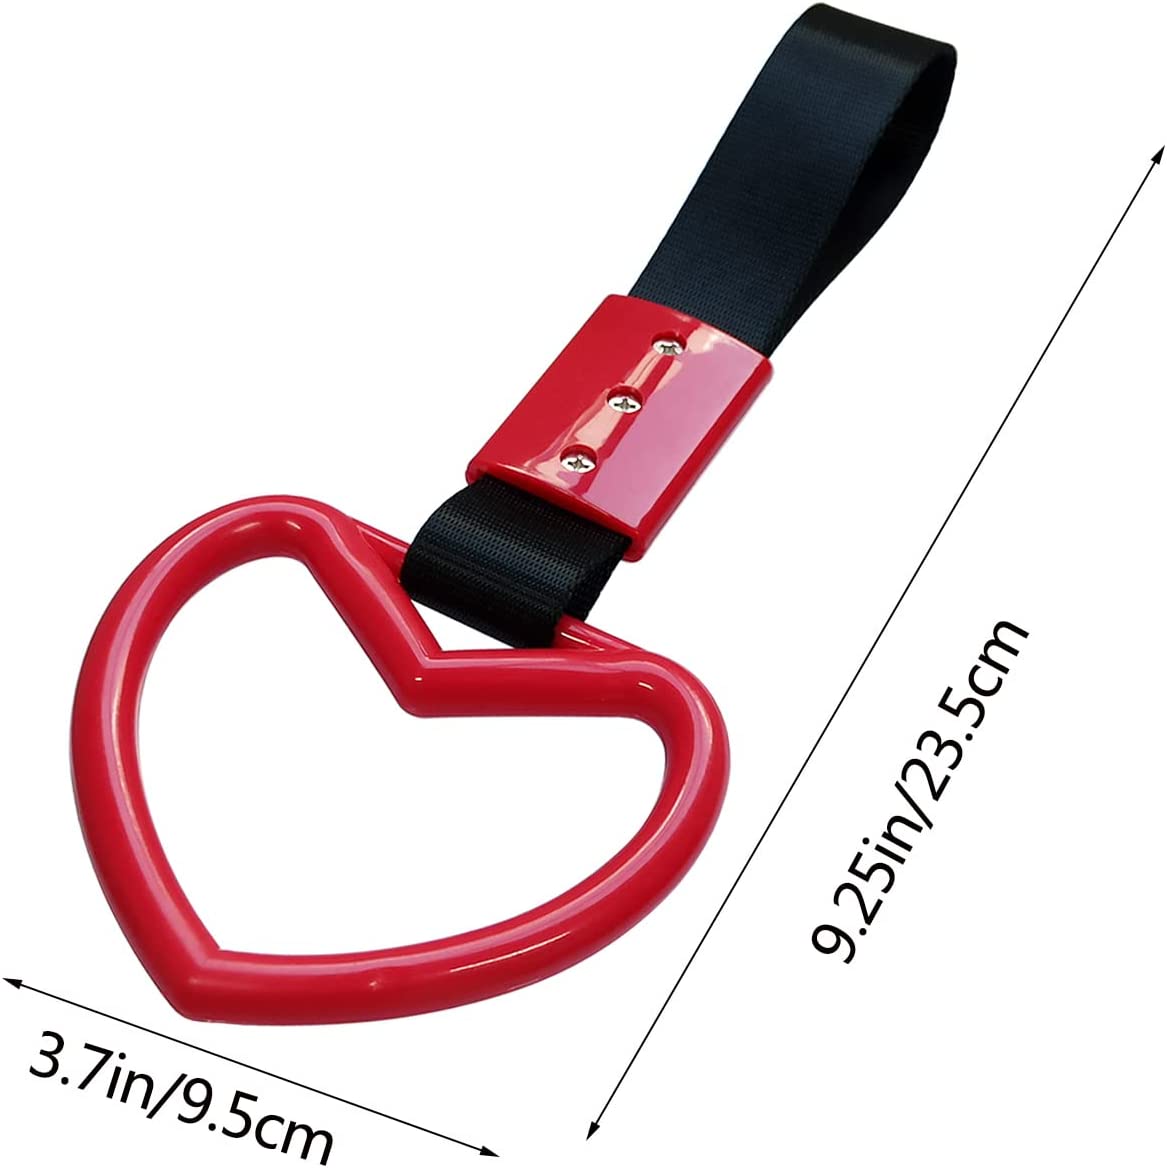 2 Pieces Heart-shaped Jdm Tsurikawa Rings SUV Bus Car Handle Straps Japanese Bosozoku Subway Ring for Car Warning and Interior Exterior Decoration (Red/Black)